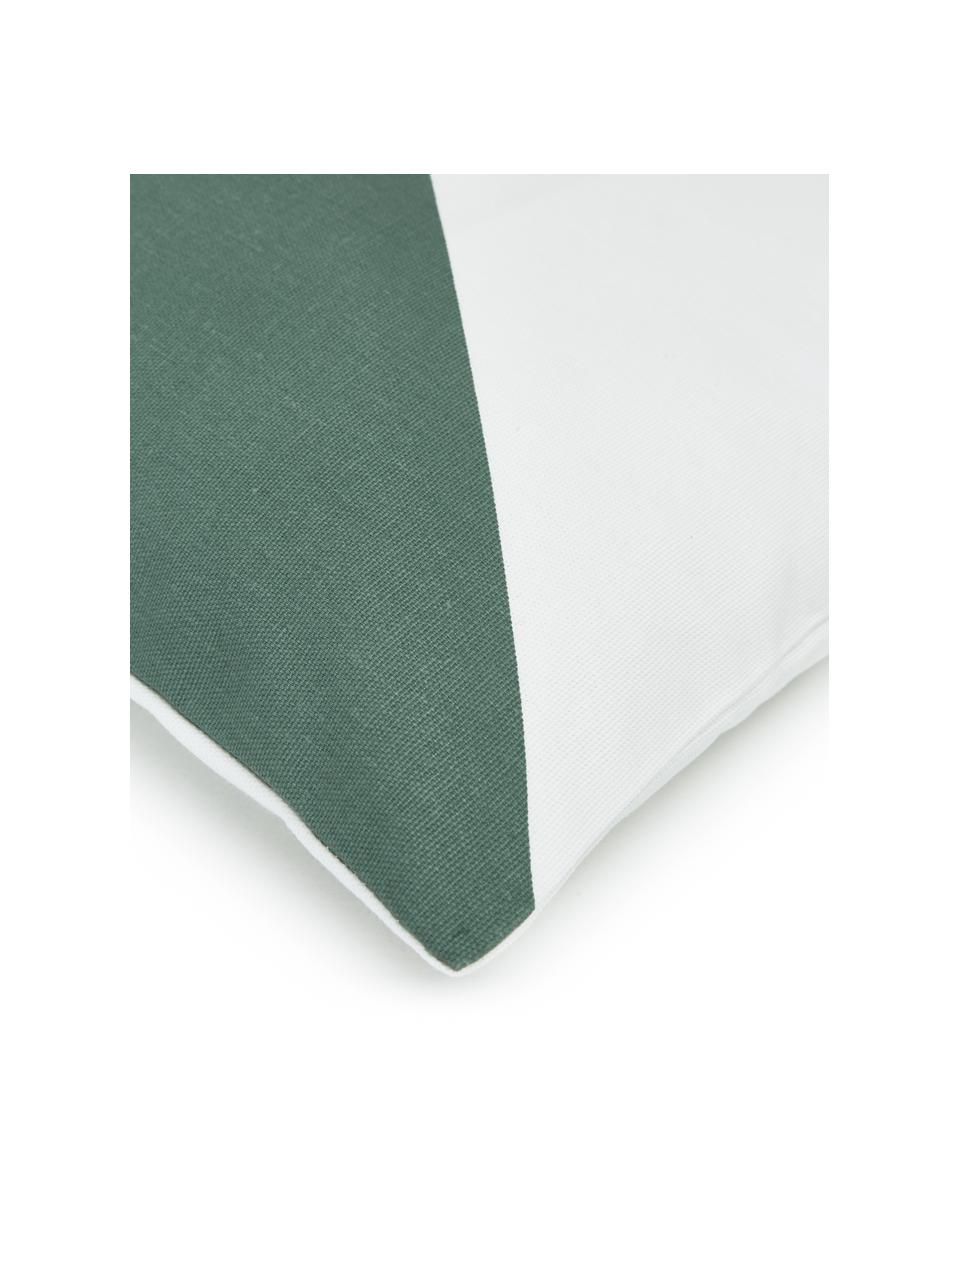 Federa arredo a strisce in cotone verde salvia/bianco Kilana, 100% cotone, Bianco, verde salvia, Larg. 30 x Lung. 50 cm